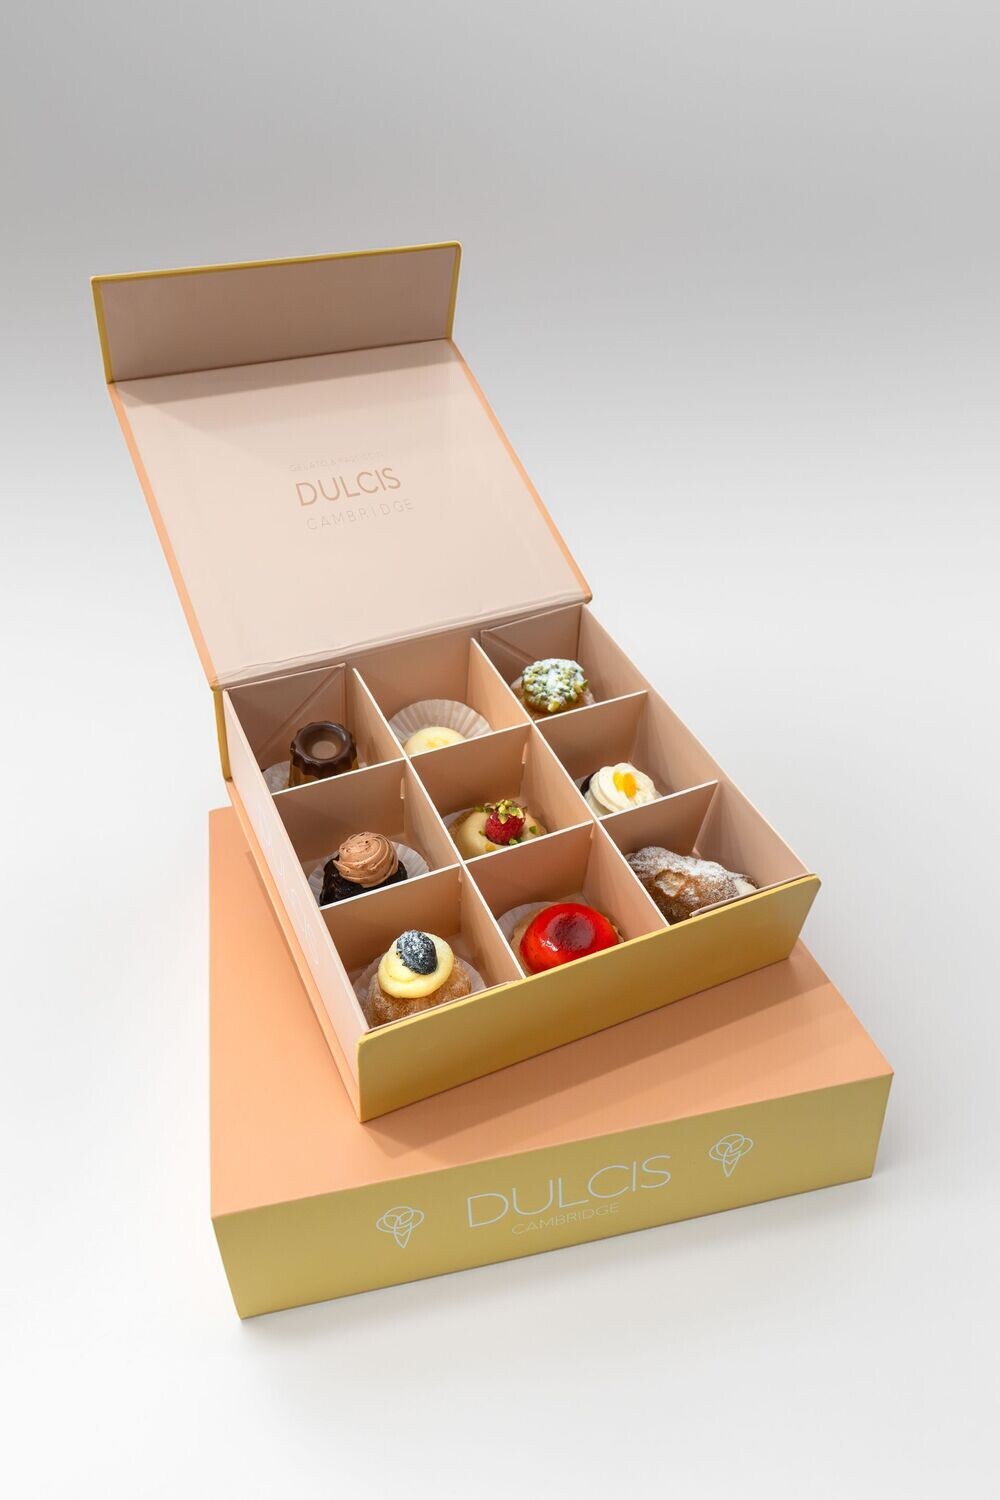 Luxurious 9 pasticcini box